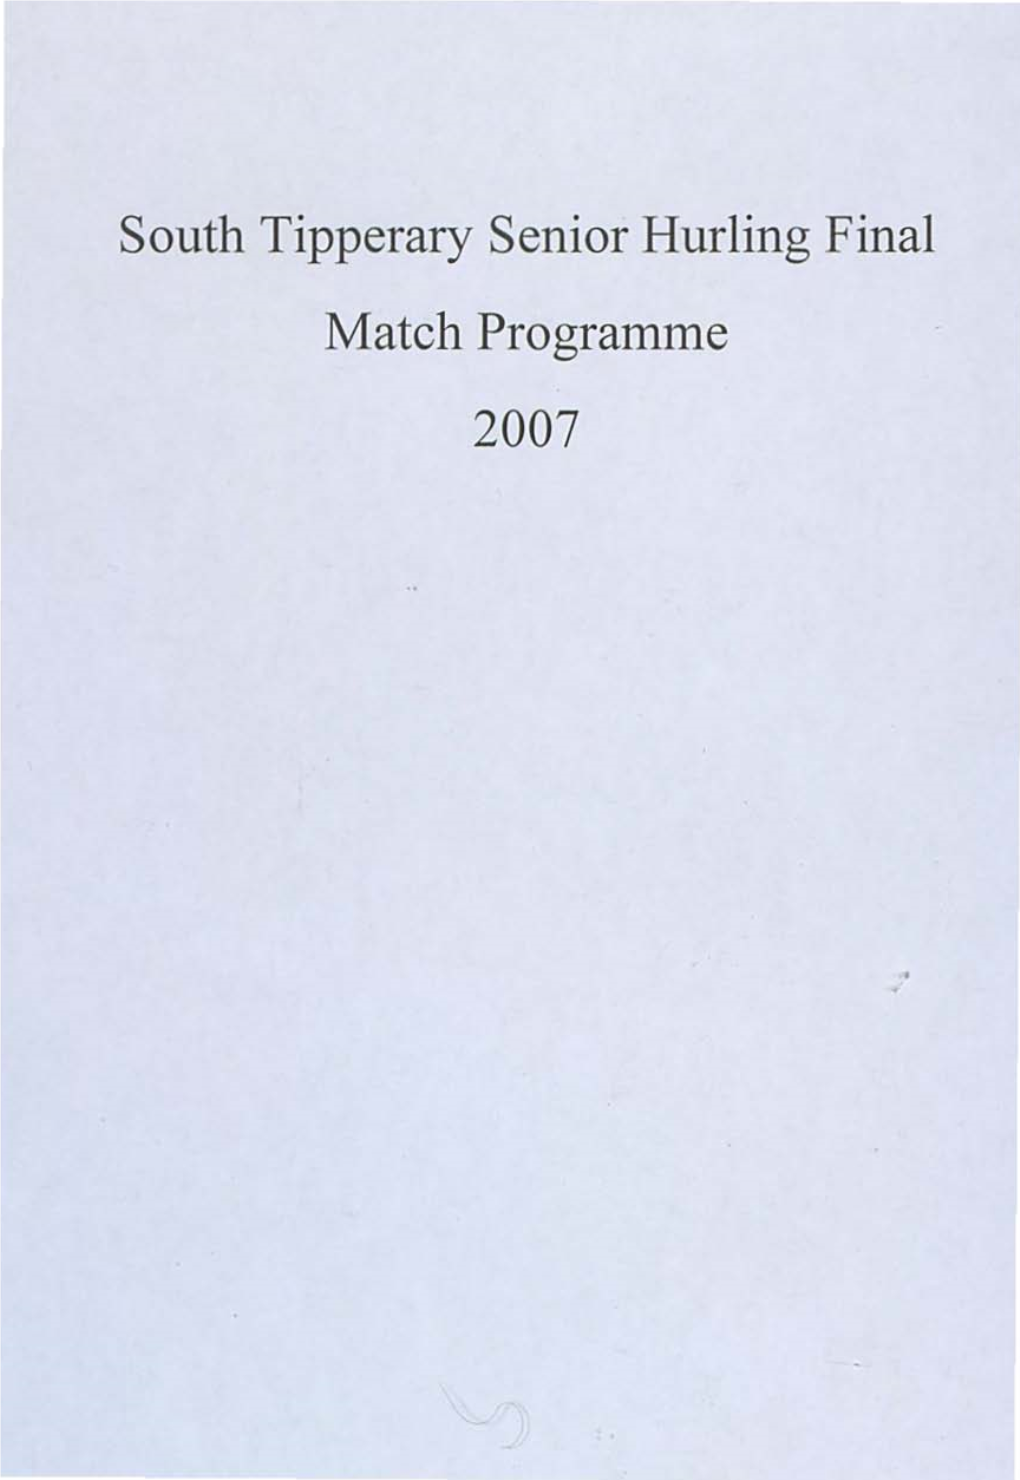 South Tipperary Senior Hurling Final Match Programme 2007